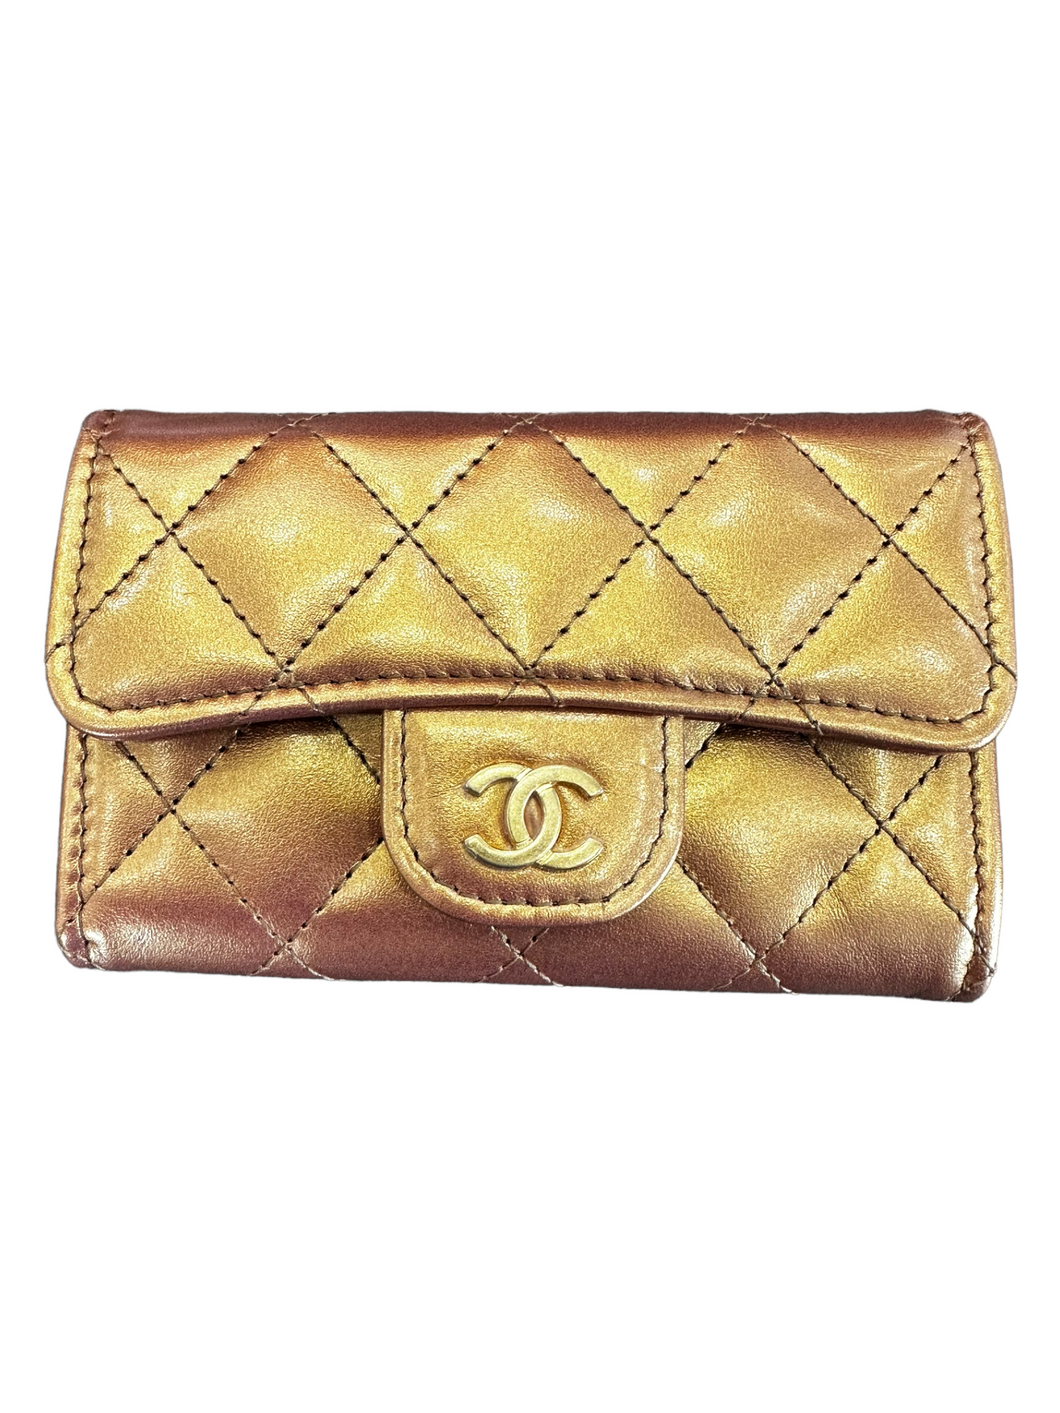 Chanel Iridescent Rose Gold Card Holder